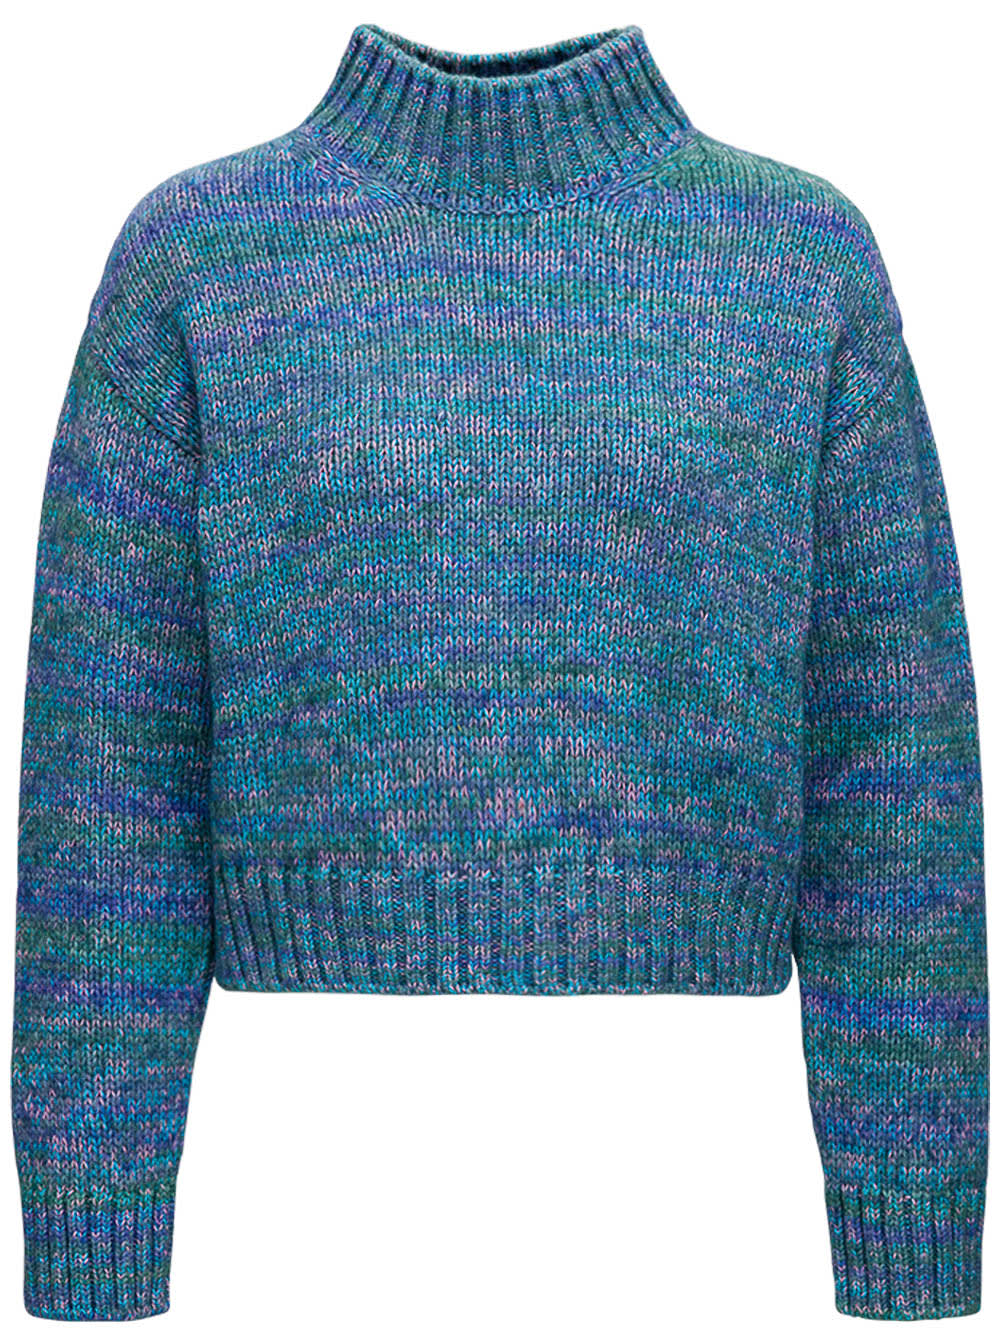 M Missoni Blue Cotton Blend Sweater